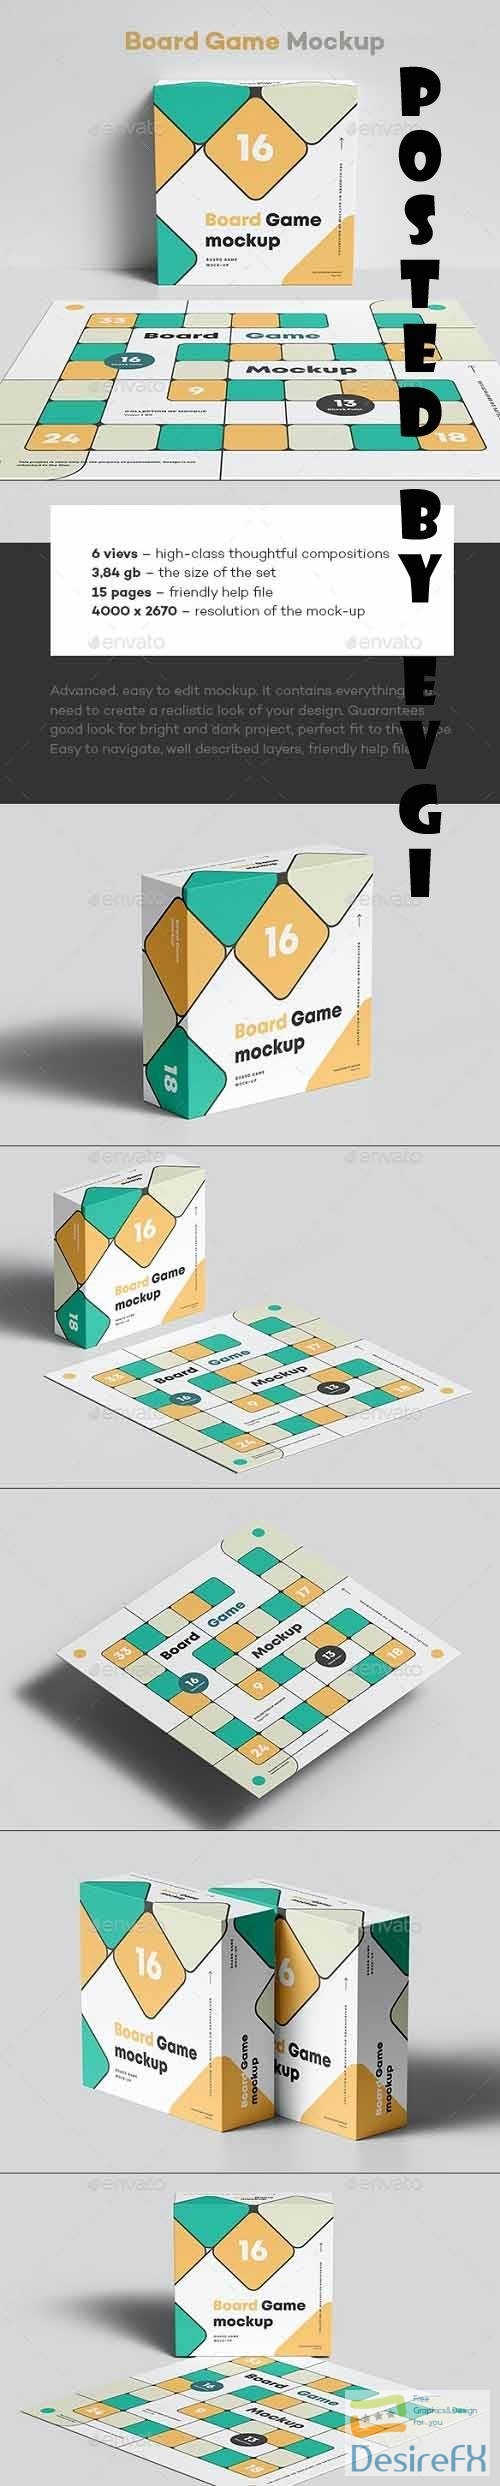 Board Game Mock-up - 36053335